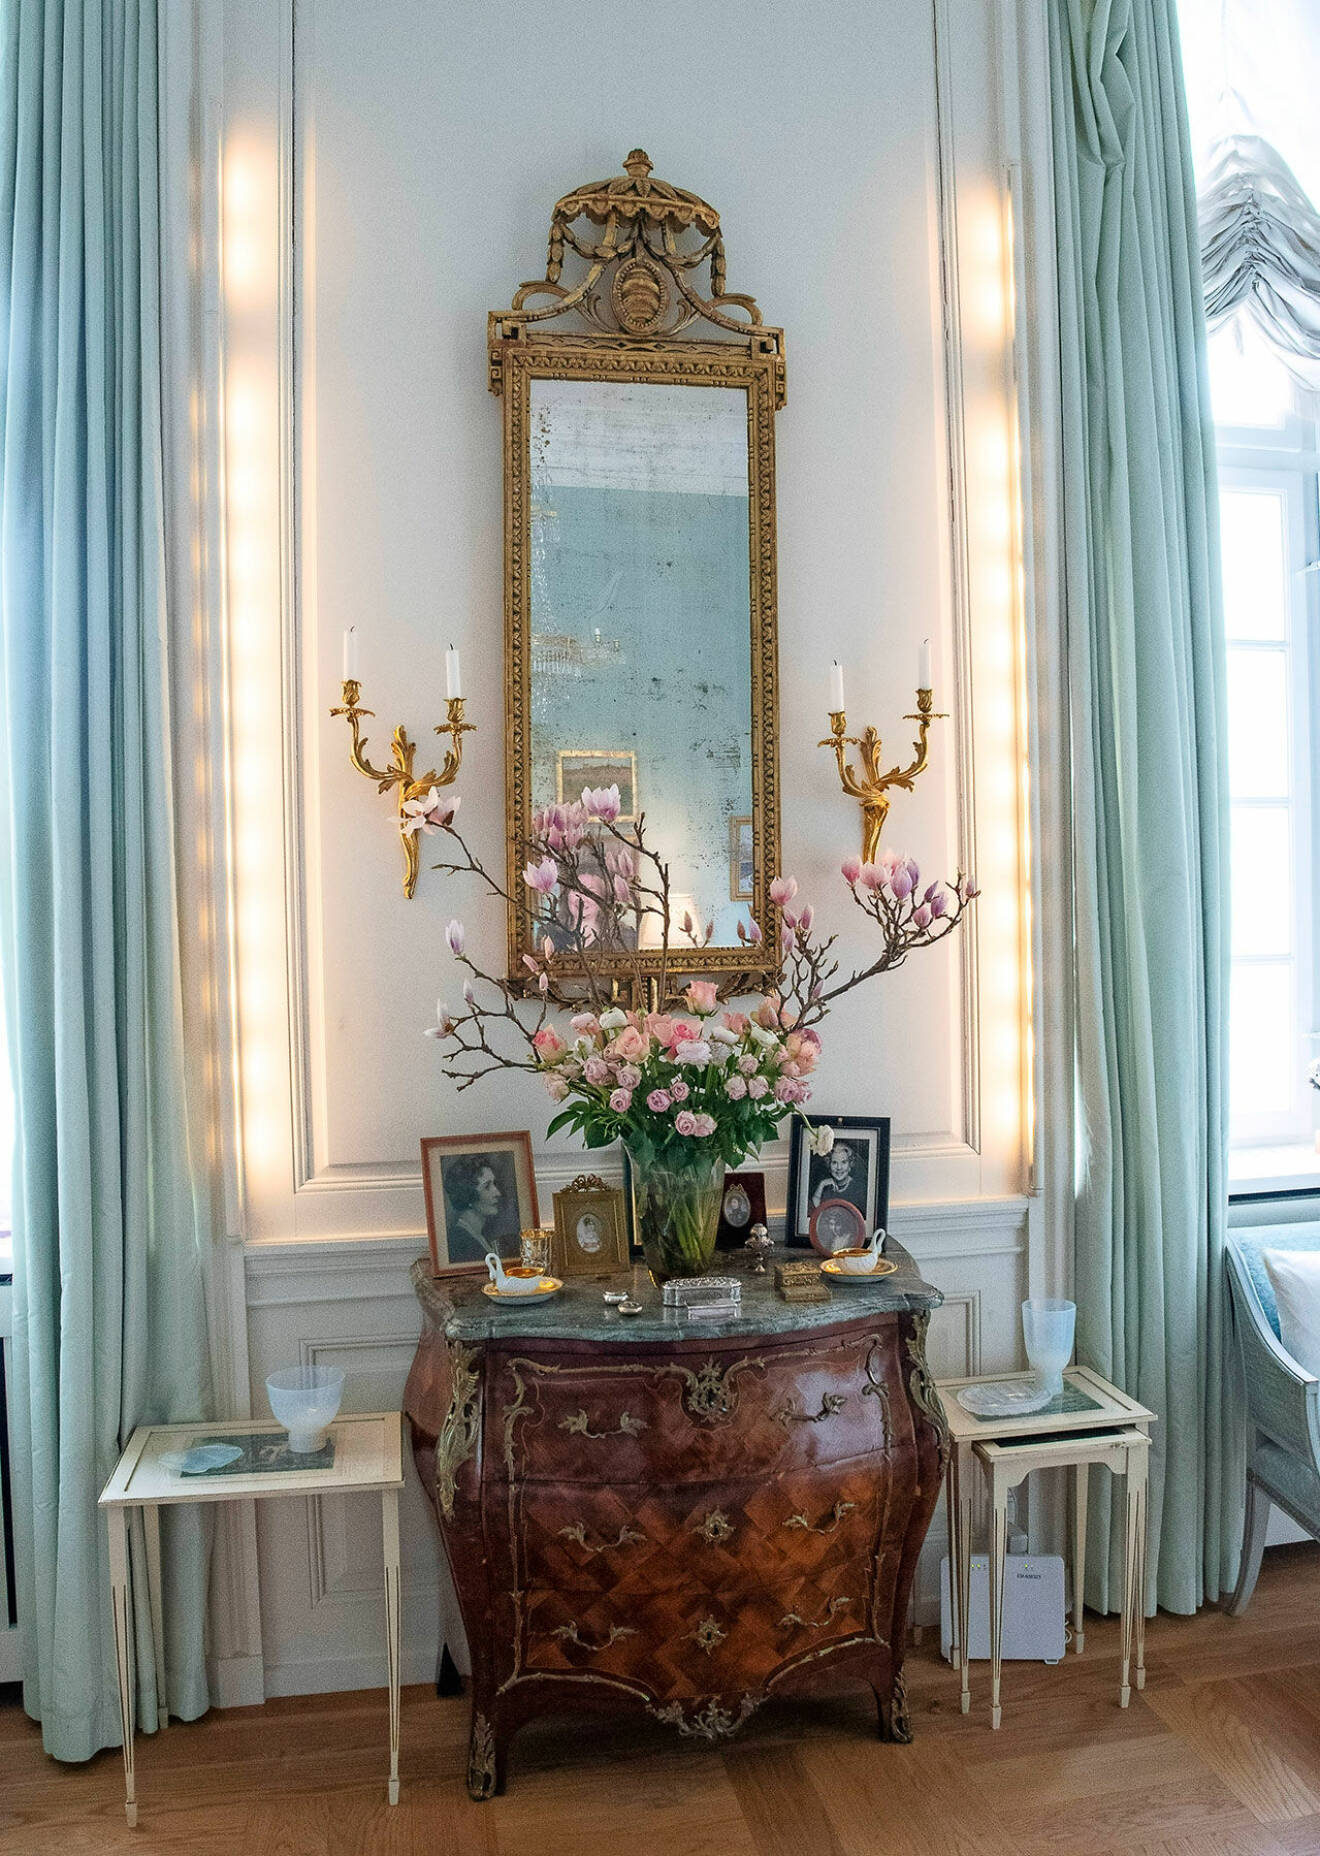 Spegel på väggen hemma hos Prinsessan Benedikte av Danmark